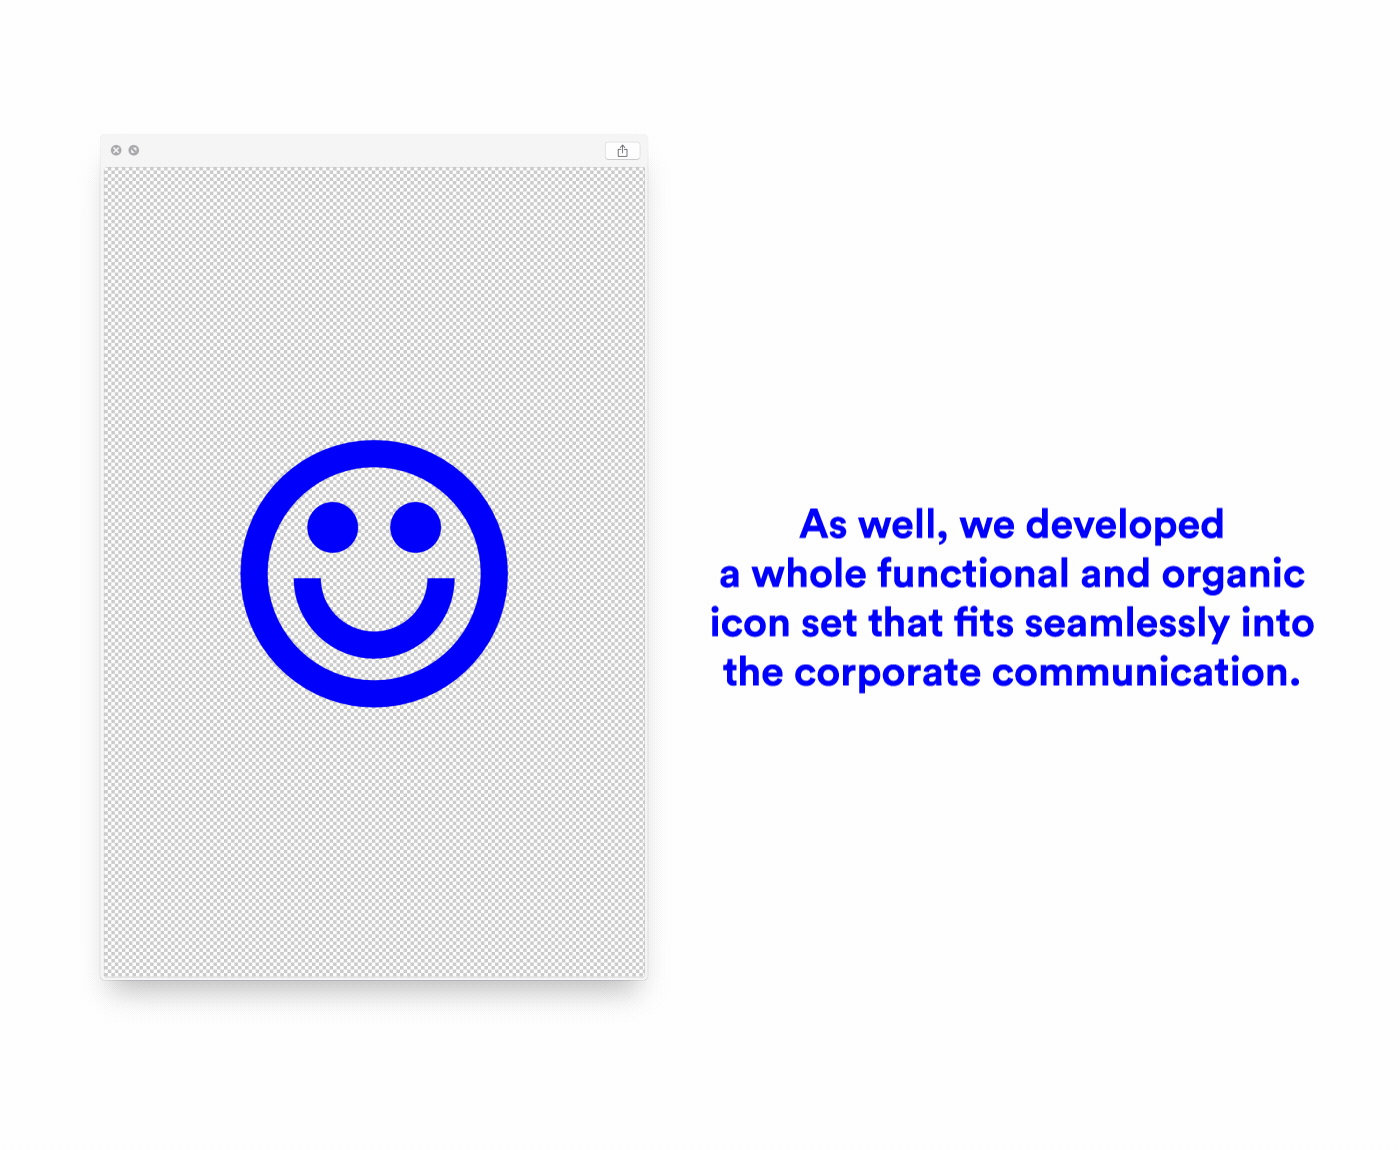 branding  madebymake cloudthinkn Corporate Design icons